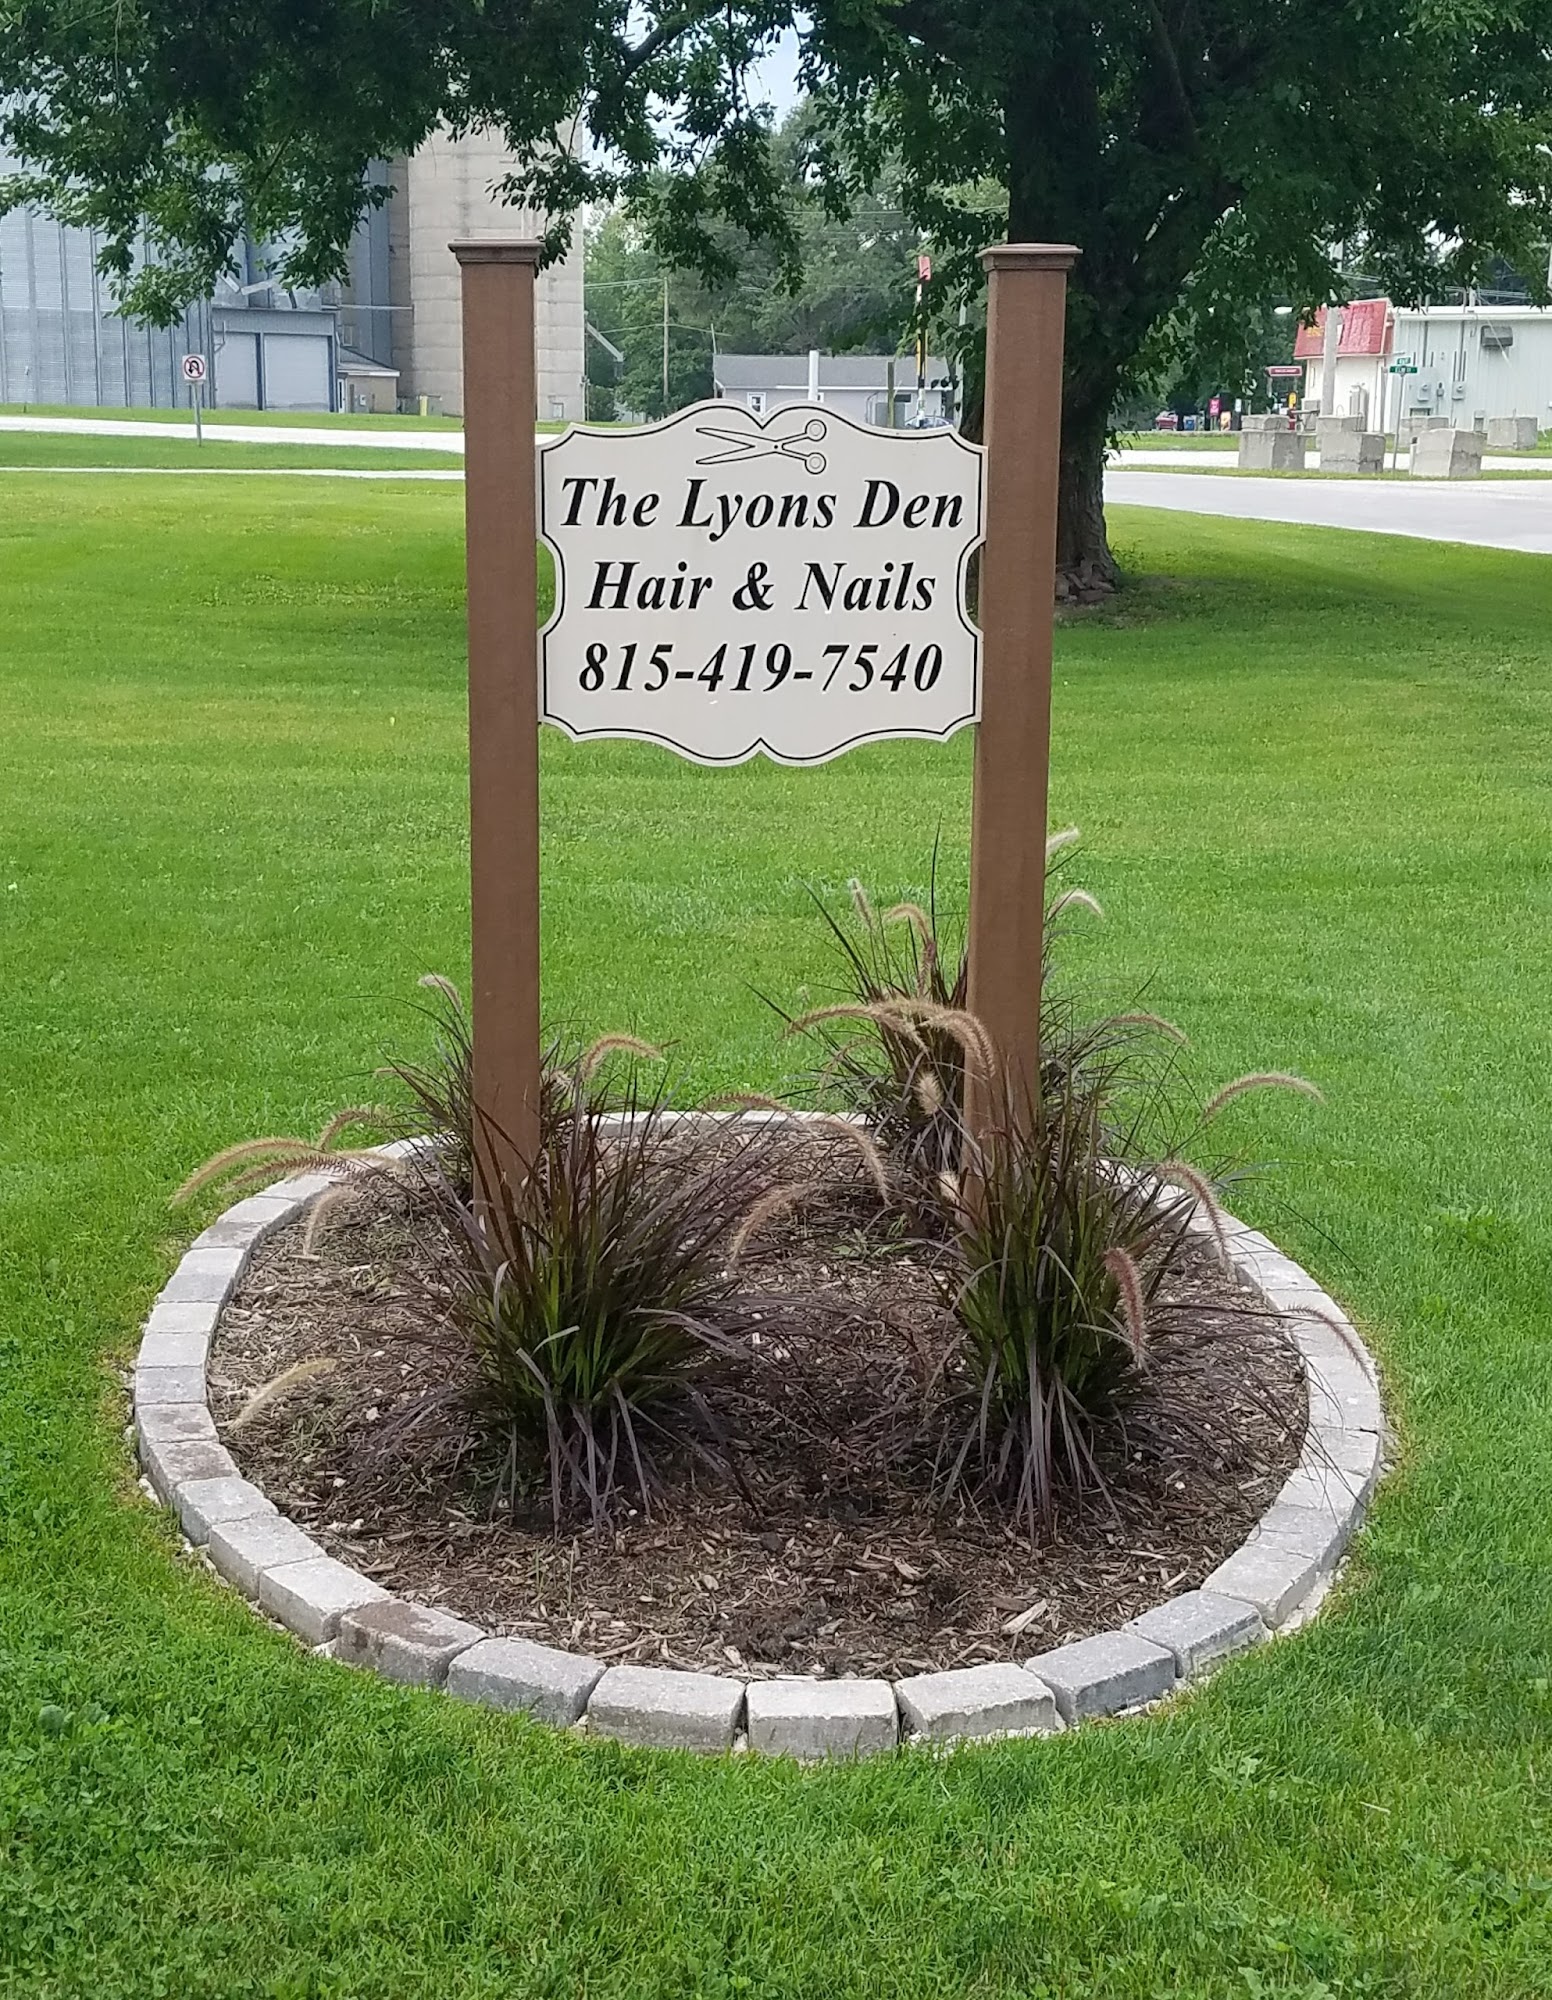 The Lyons Den N, 205 4th St, Cornell Illinois 61319